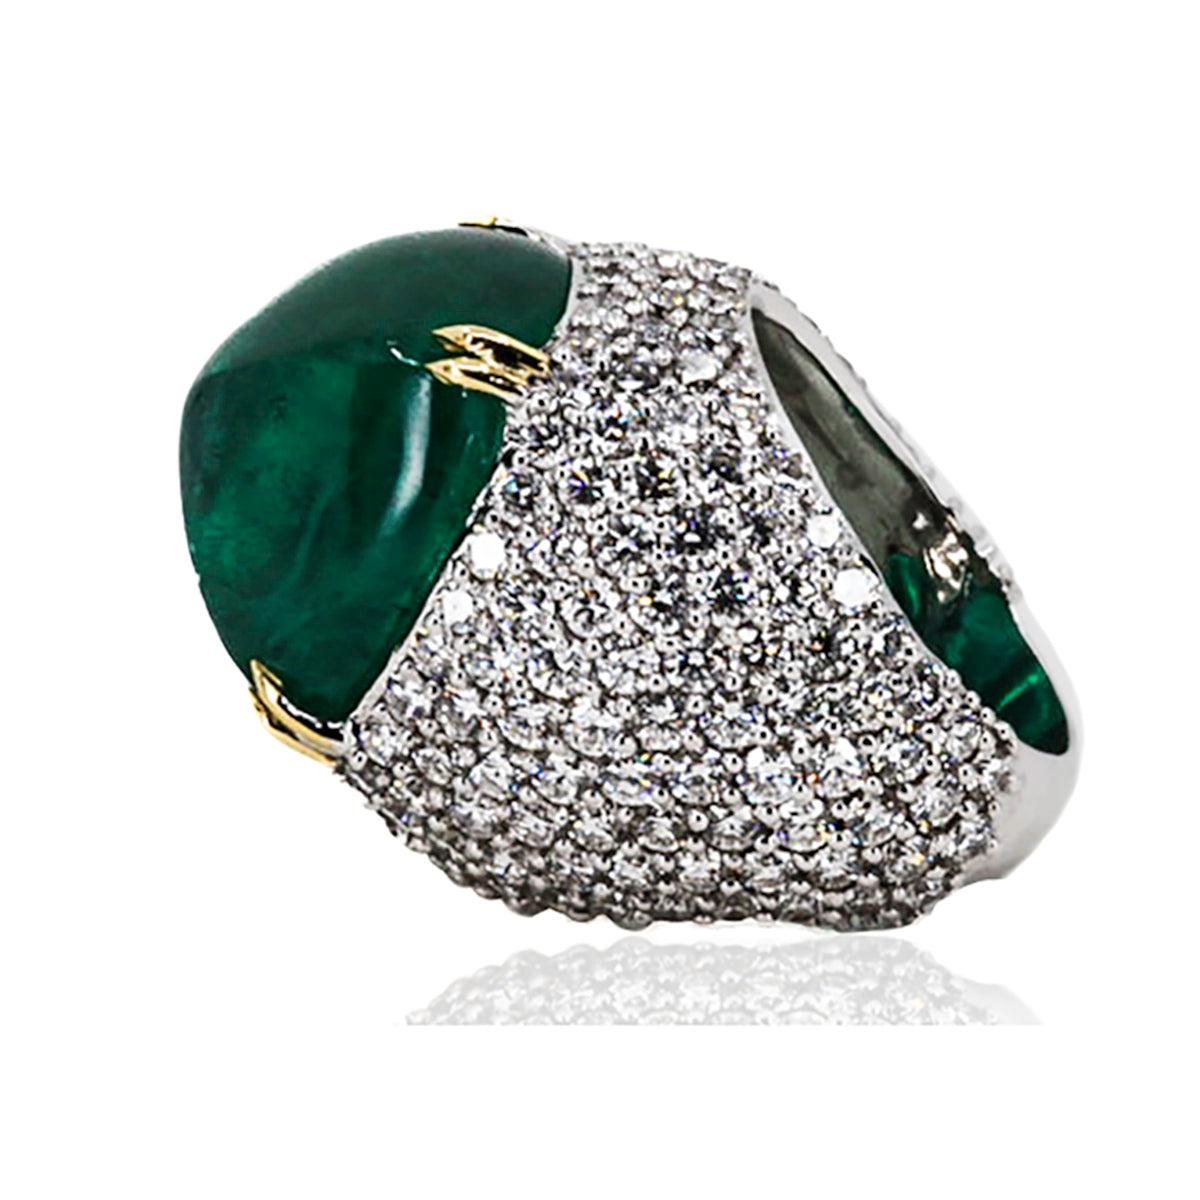 Stunning Sugarloaf Cabochon Emerald Ring